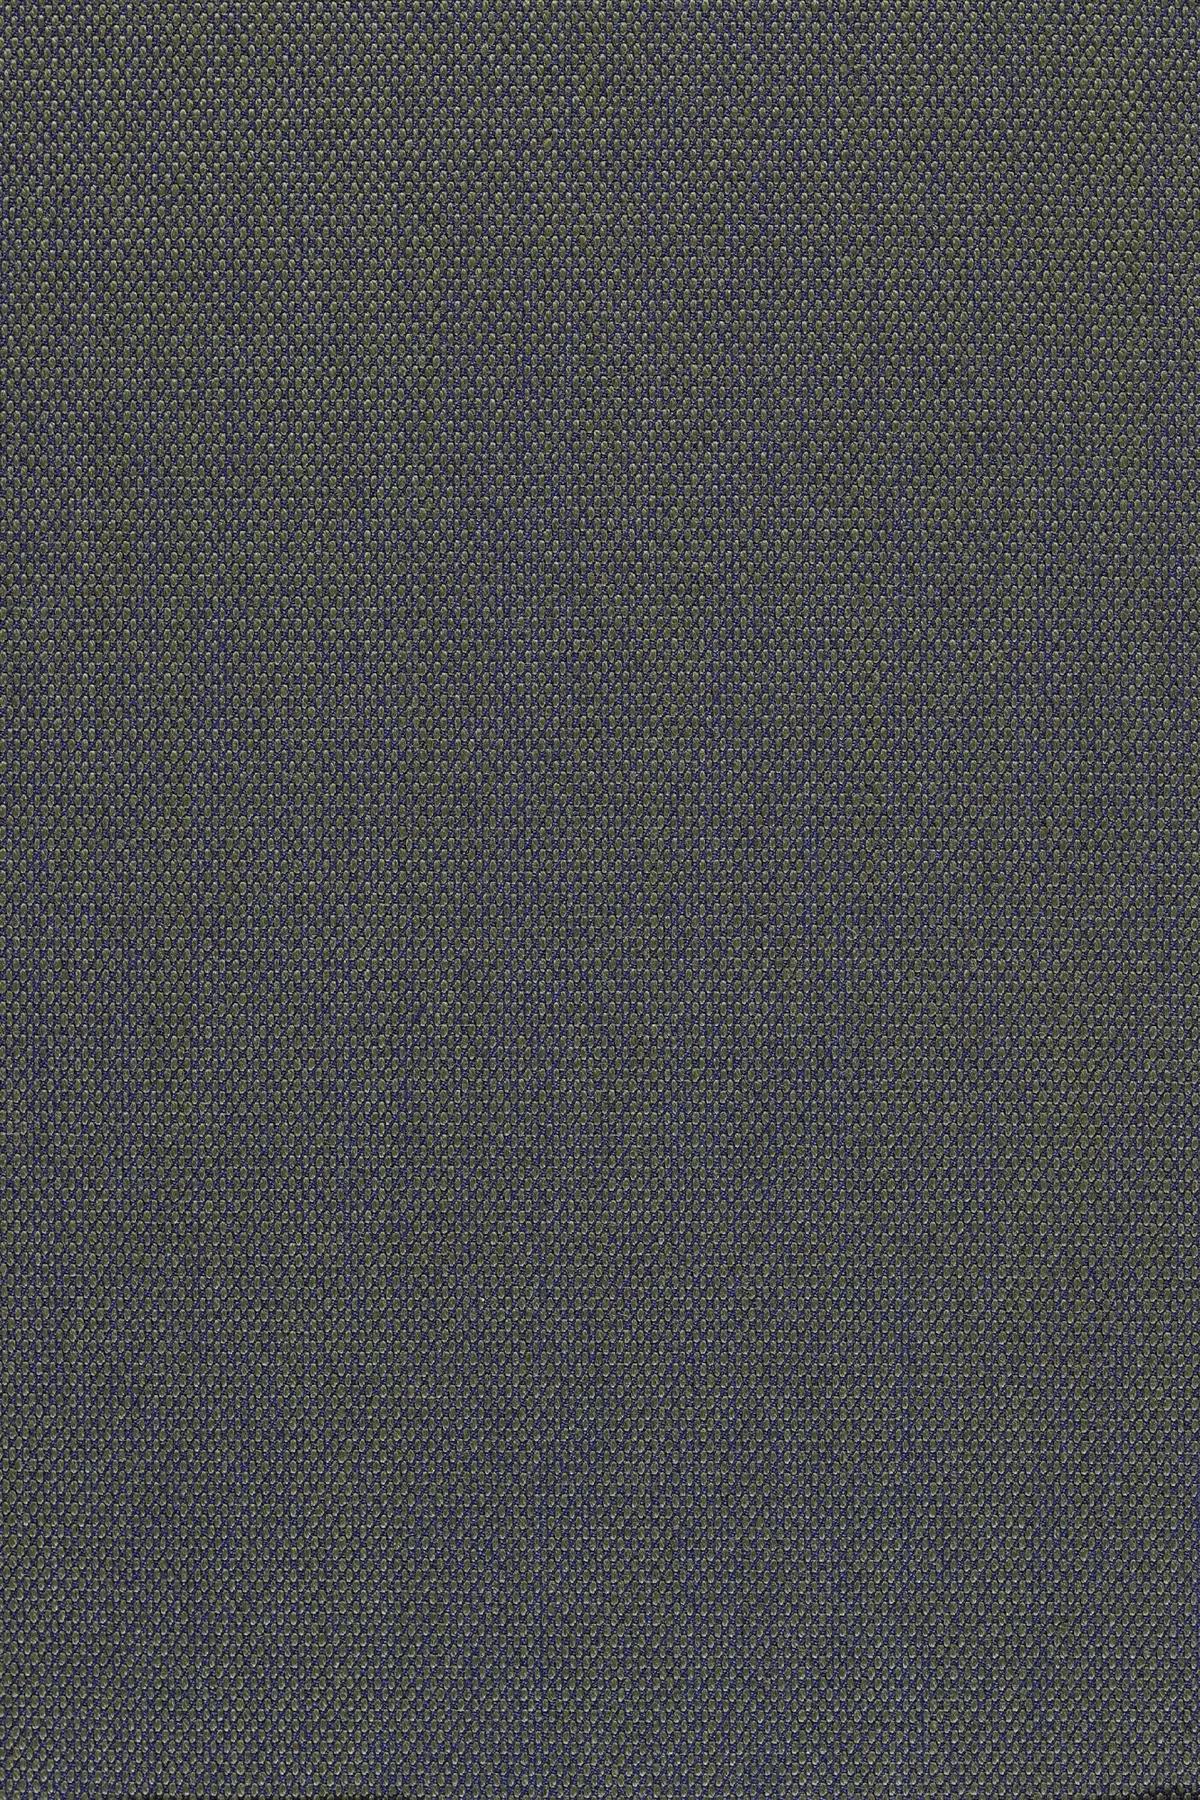 Fabric sample Steelcut Trio 3 283 purple